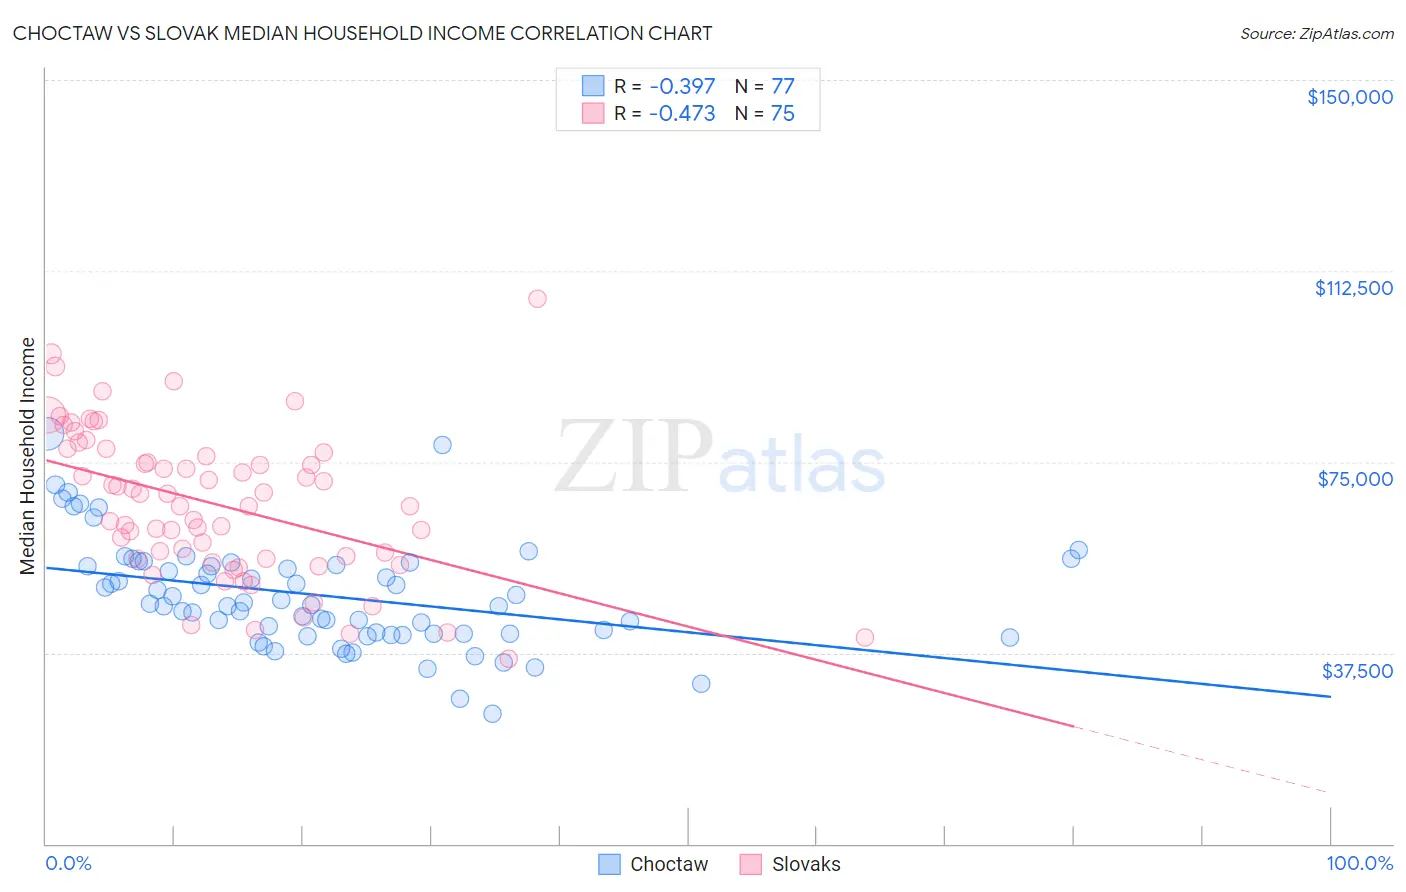 Choctaw vs Slovak Median Household Income